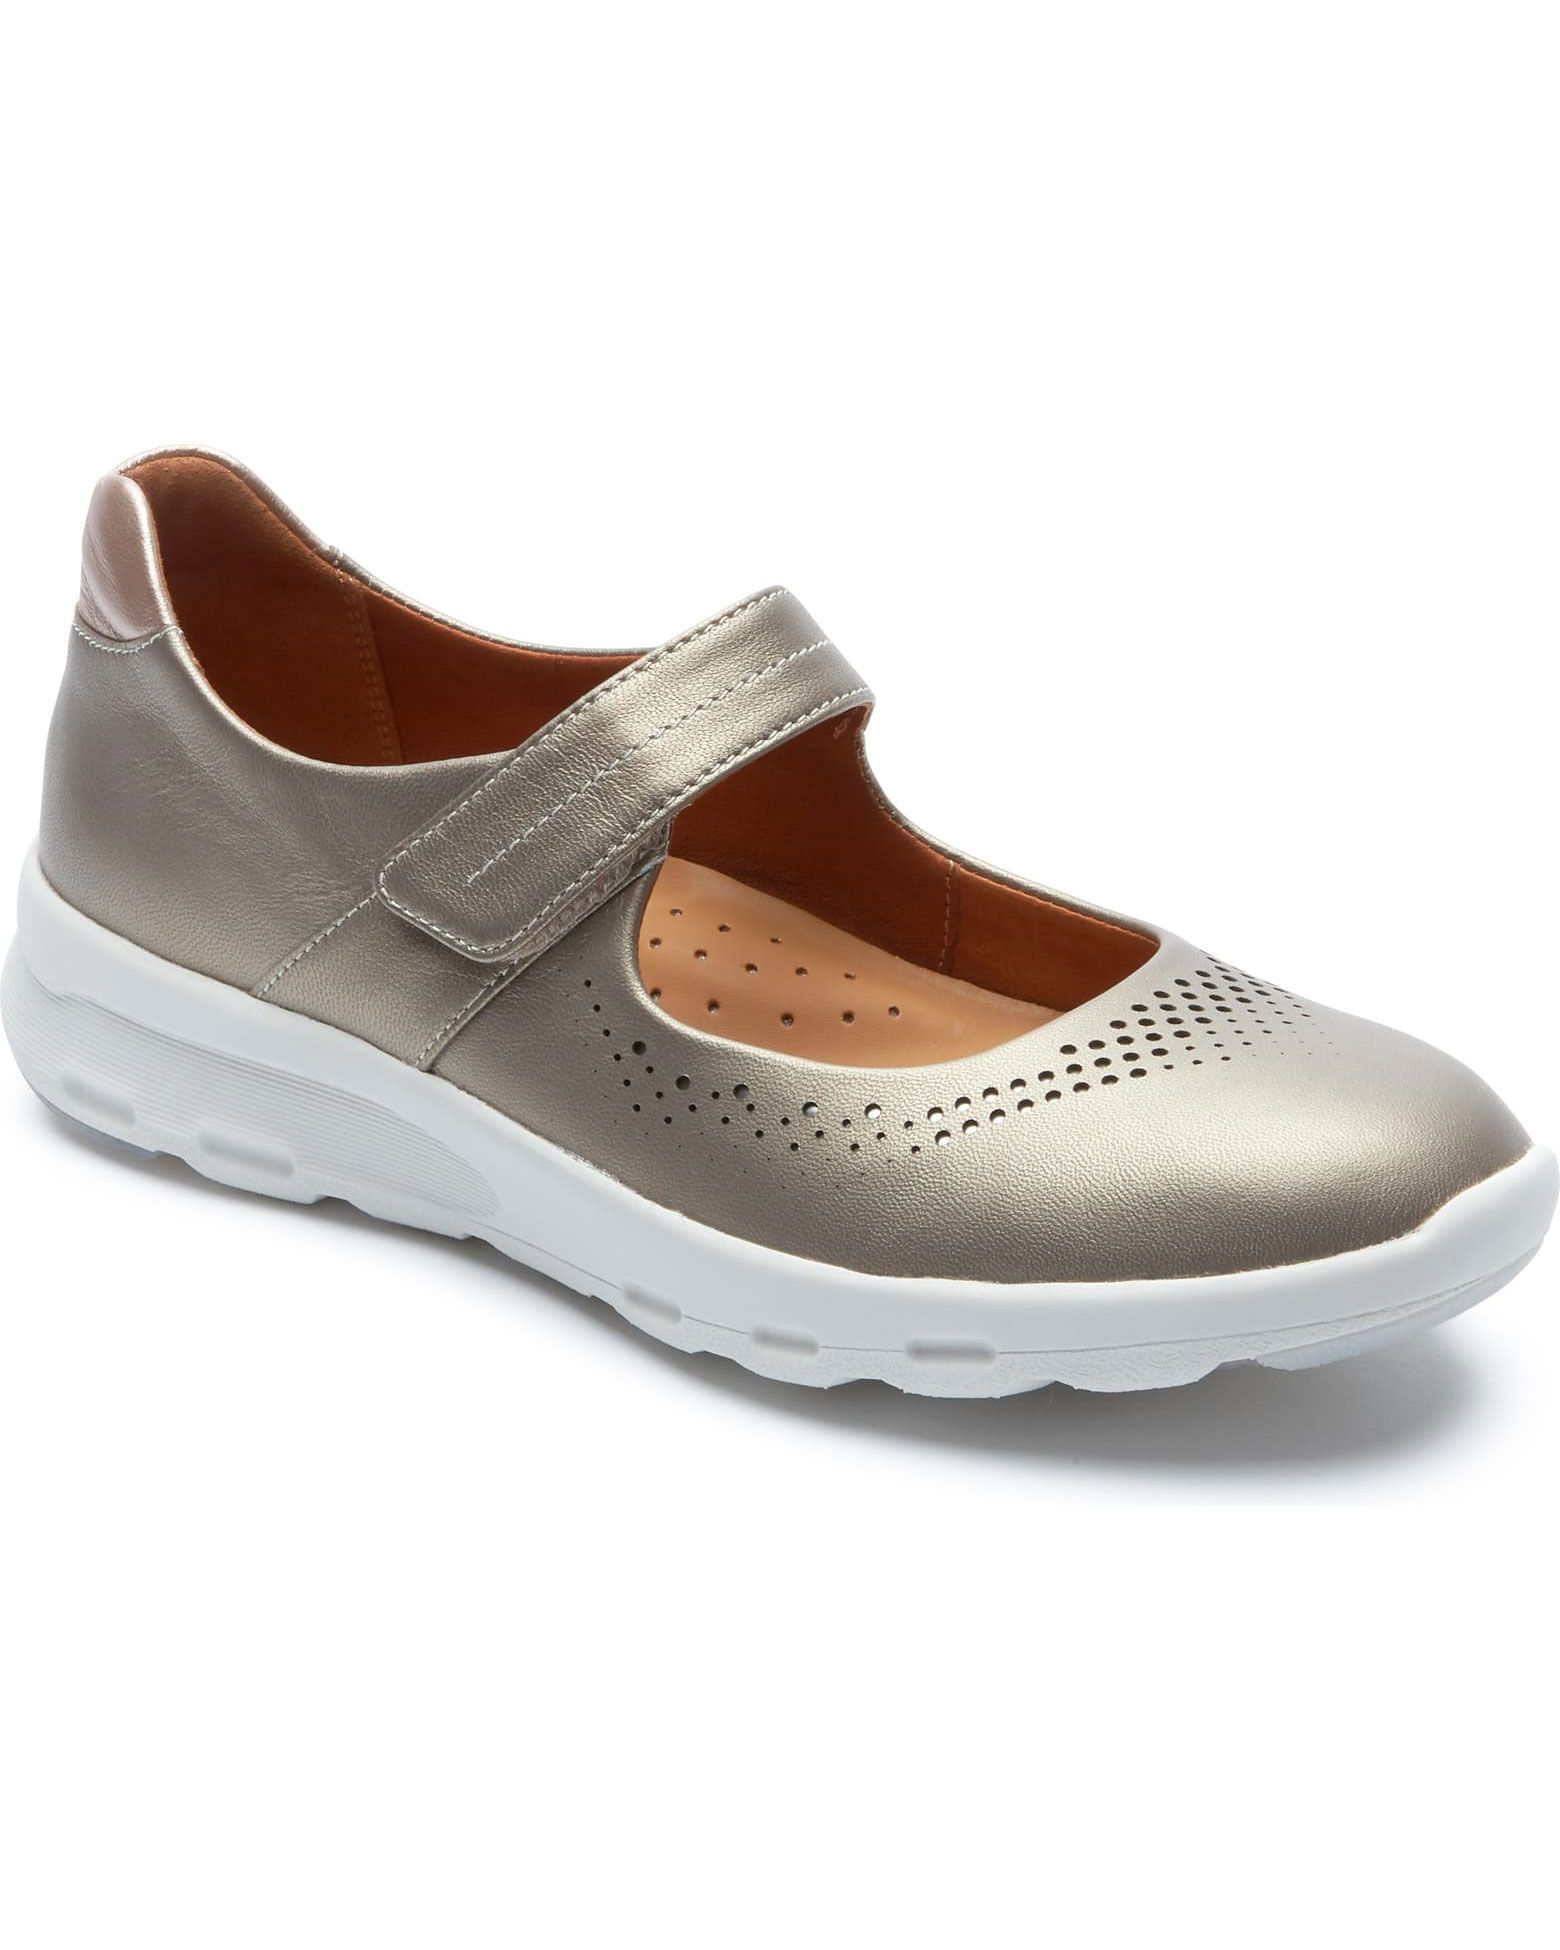 Rockport Mary Jane Walking Shoe: Լավագույն քայլող կոշիկներ կանանց համար